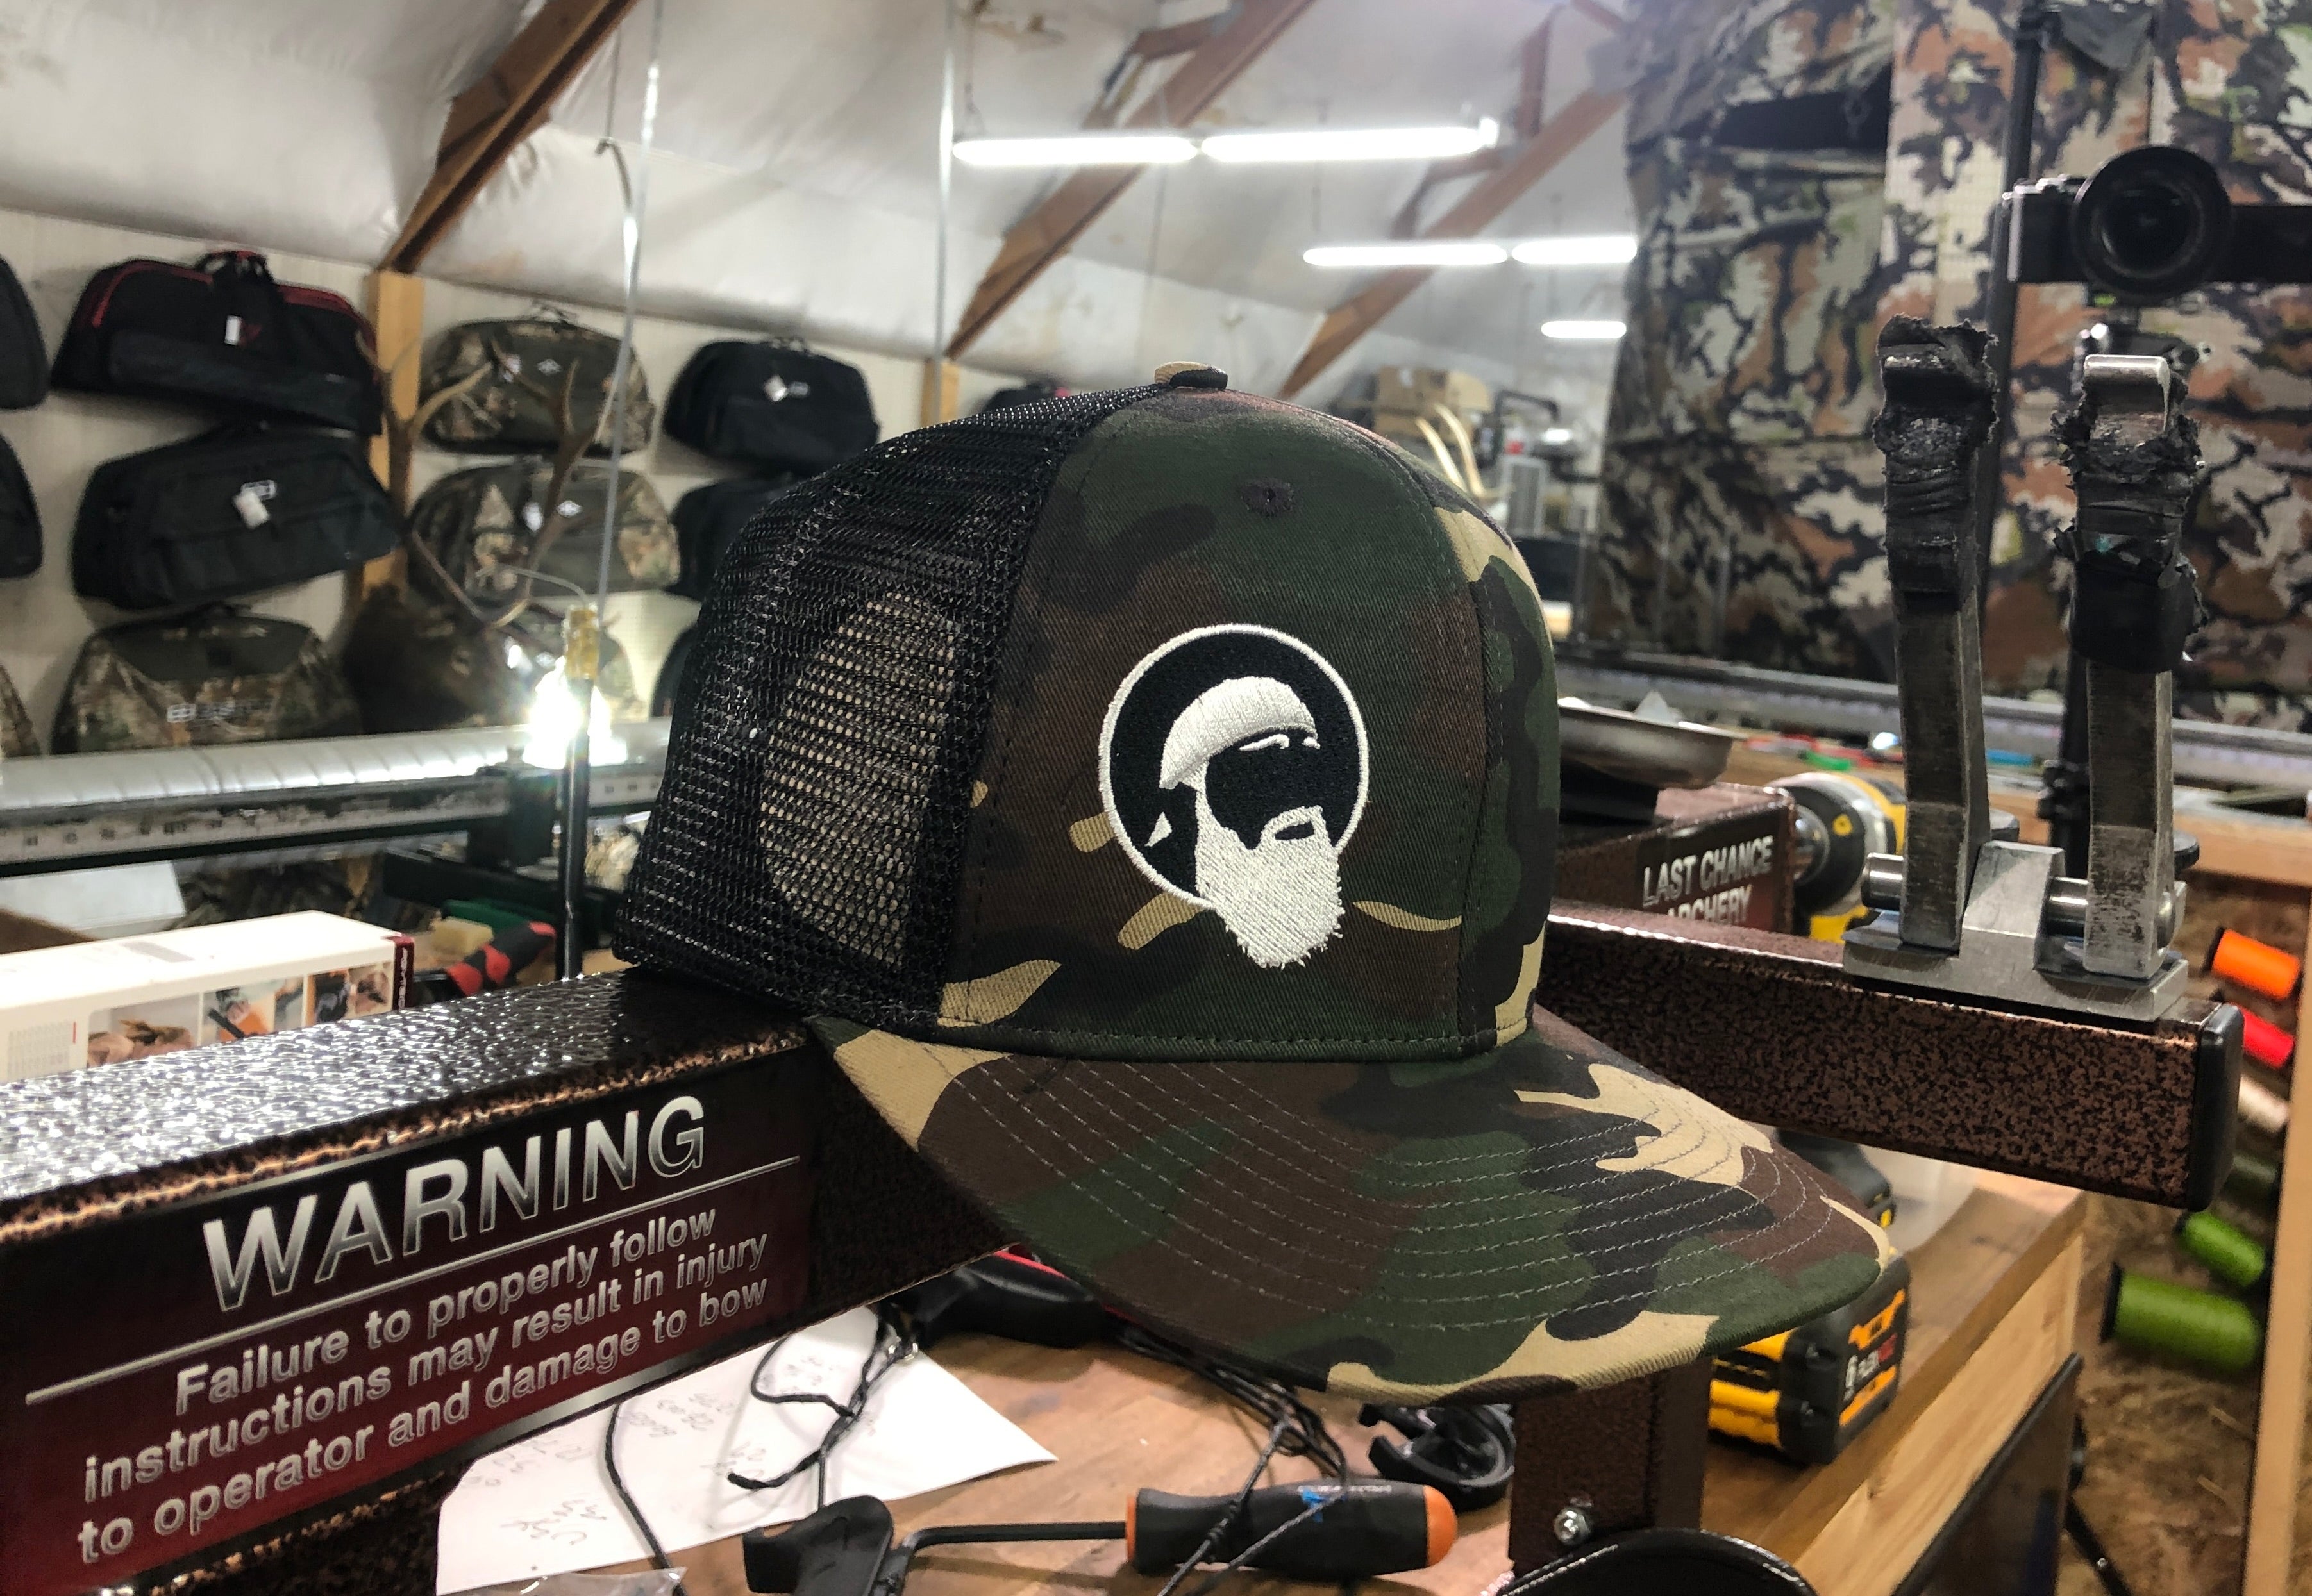 MFJJ Branded Bills!! Slightly Curved Trucker Hat (One Size Fits All) (Multiple Colors)